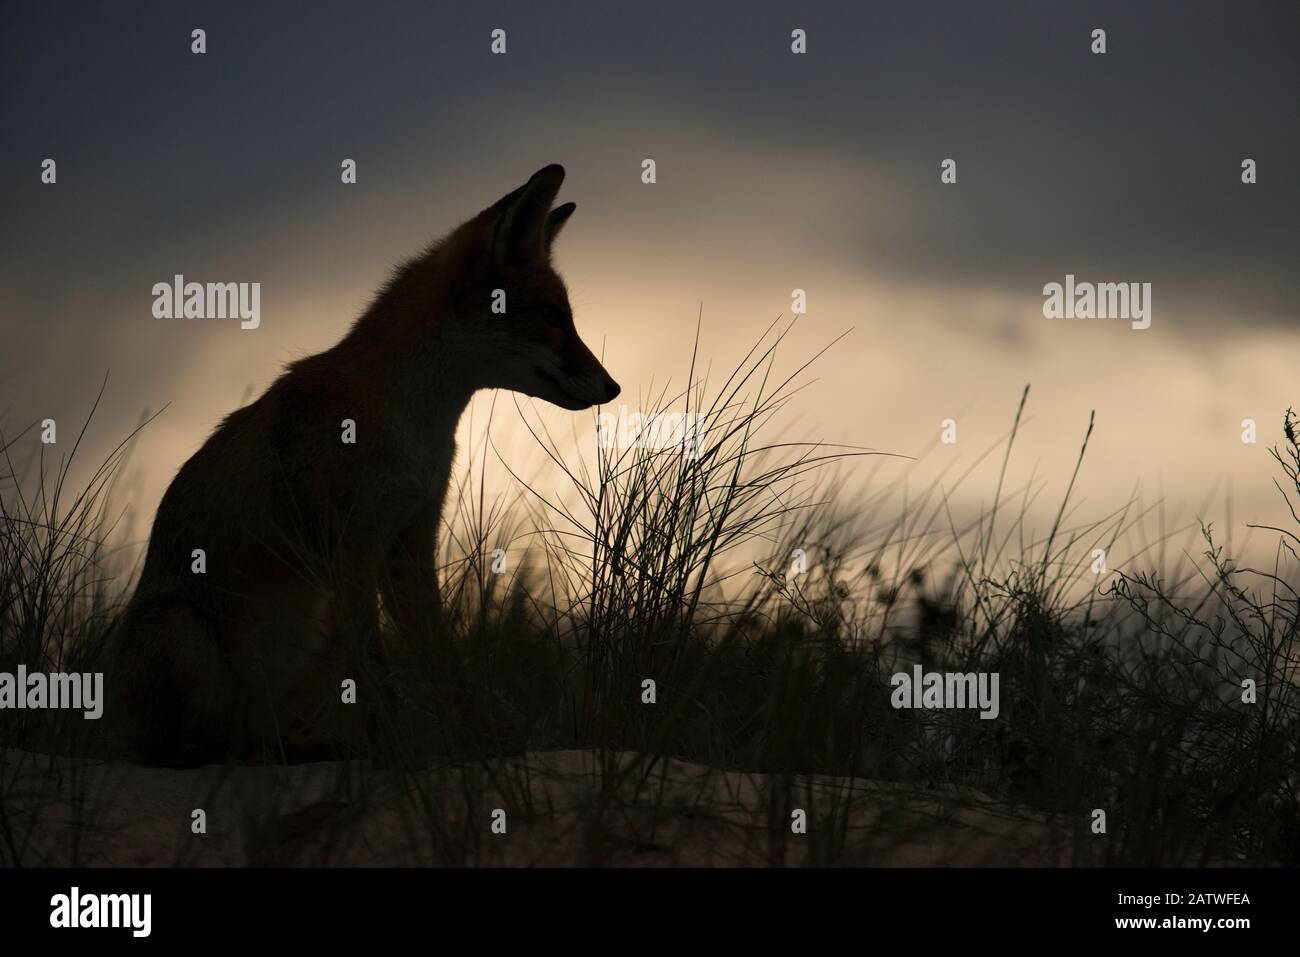 Red fox (Vulpes vulpes) silhouetted, Sado Estuary, Portugal. September Stock Photo